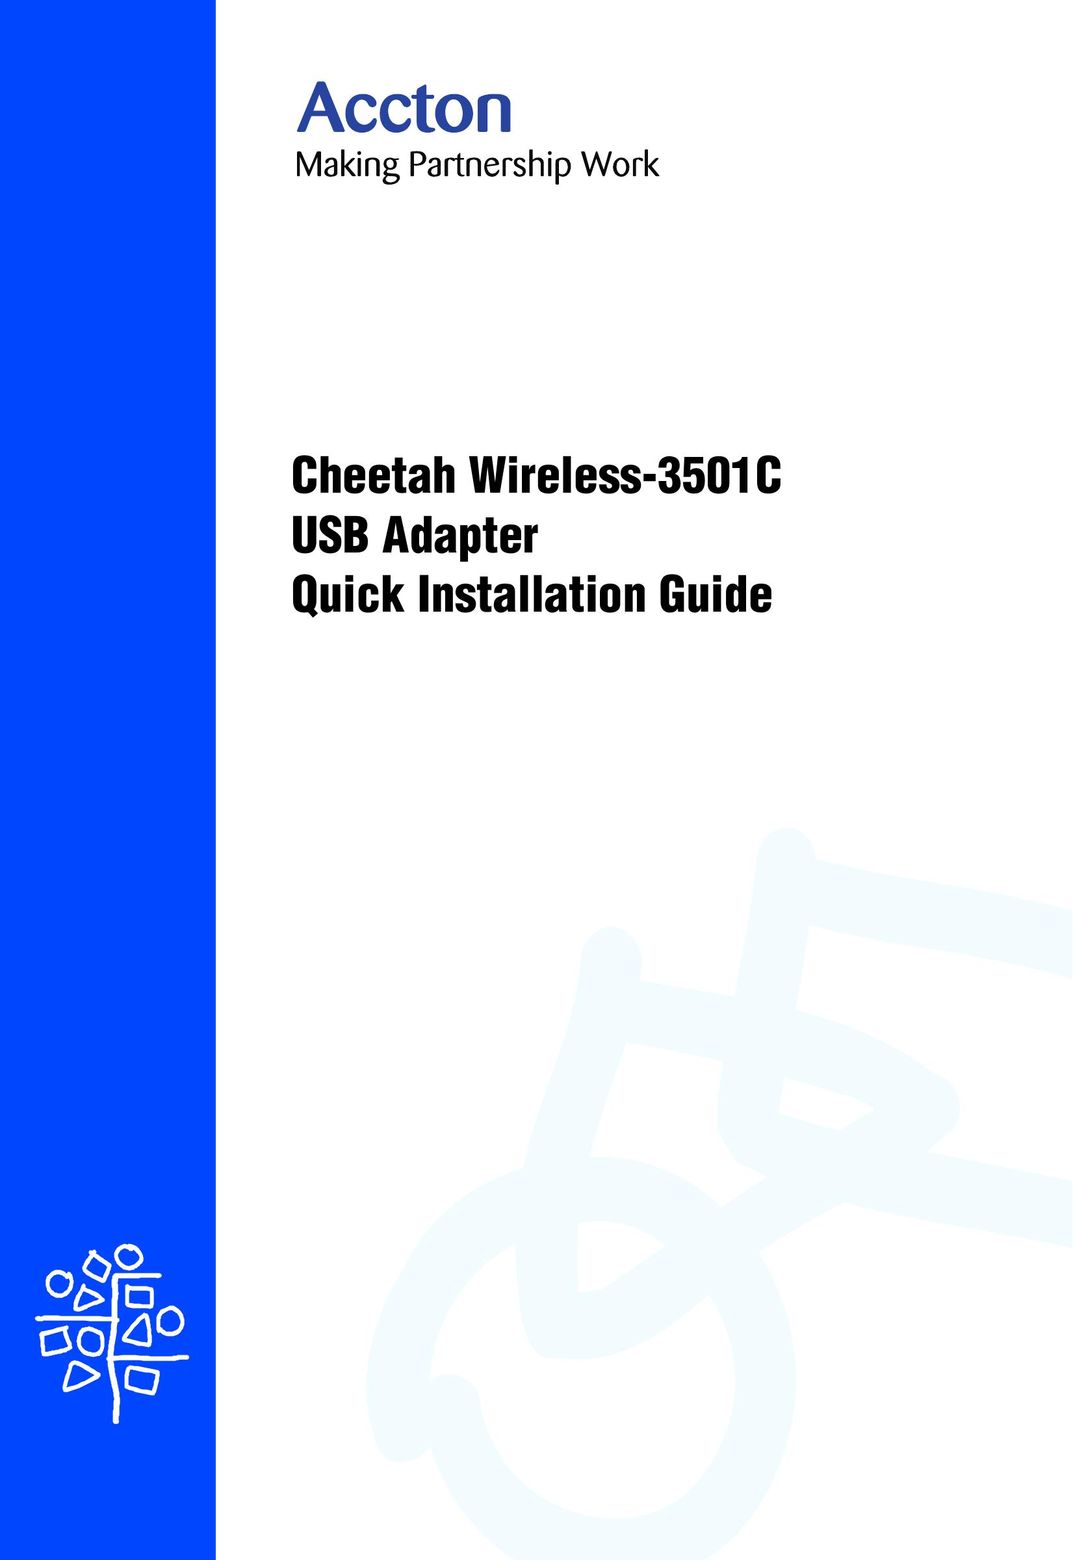 Accton Technology Cheetah Wireless USB Adapter Dollhouse User Manual